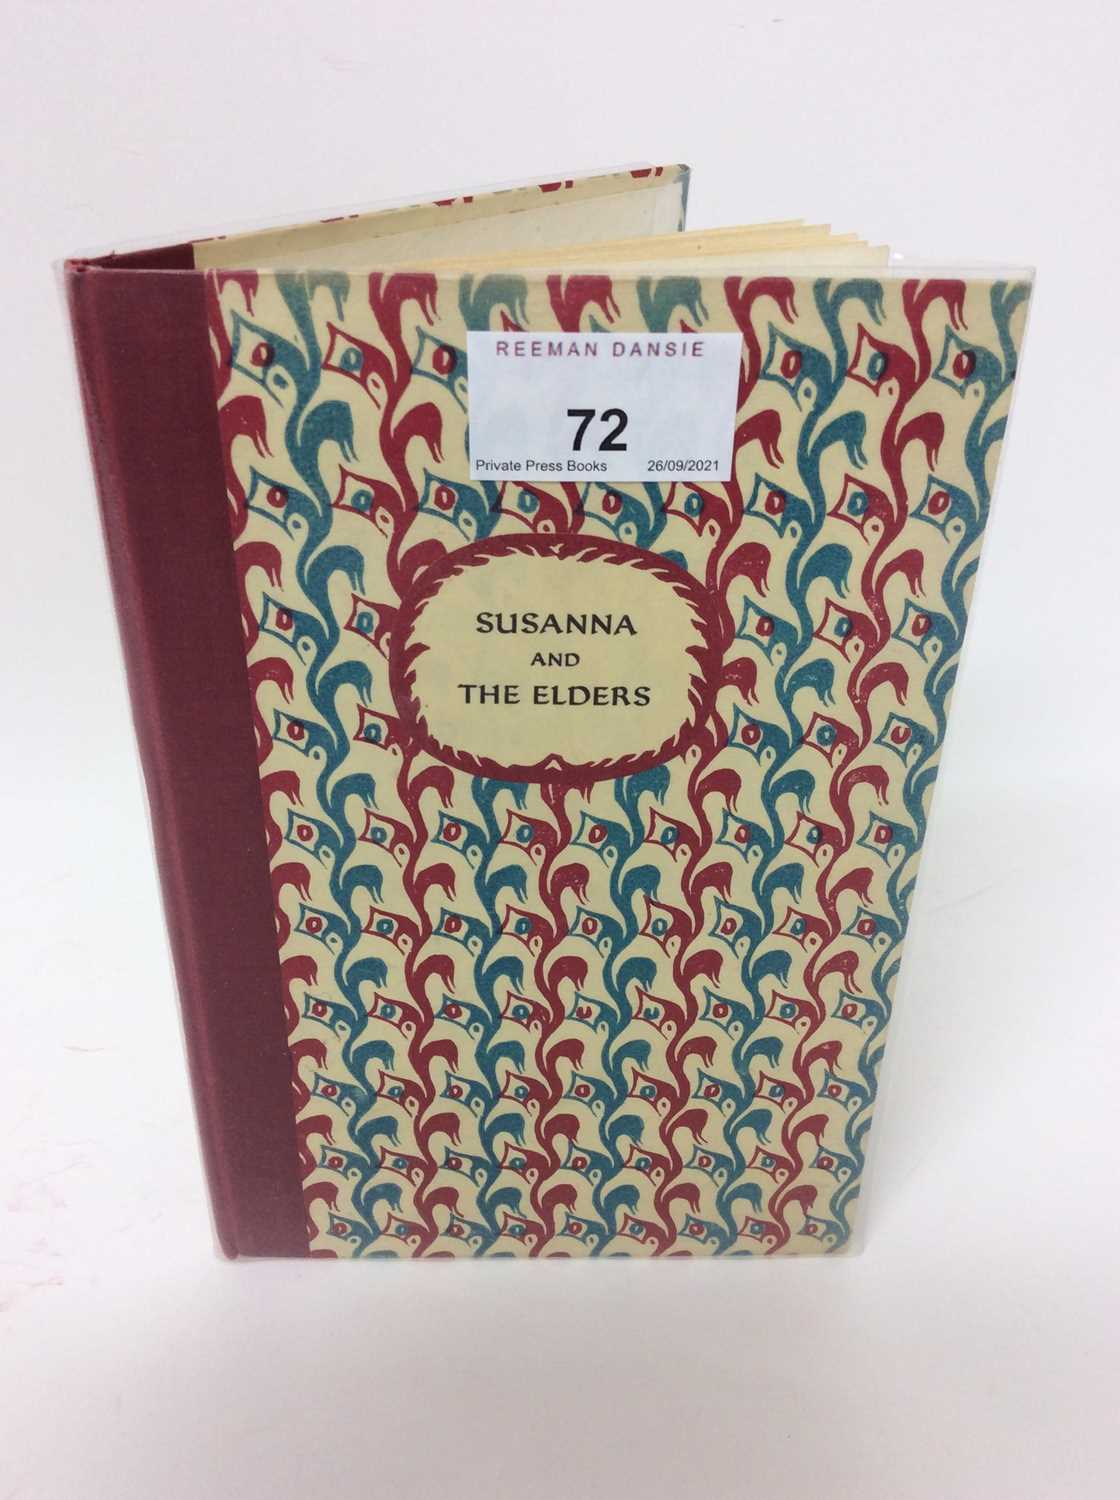 Lot 72 - John Petts and Johan Jones. Susanna and the Elders, numbered 23 of 400 copies